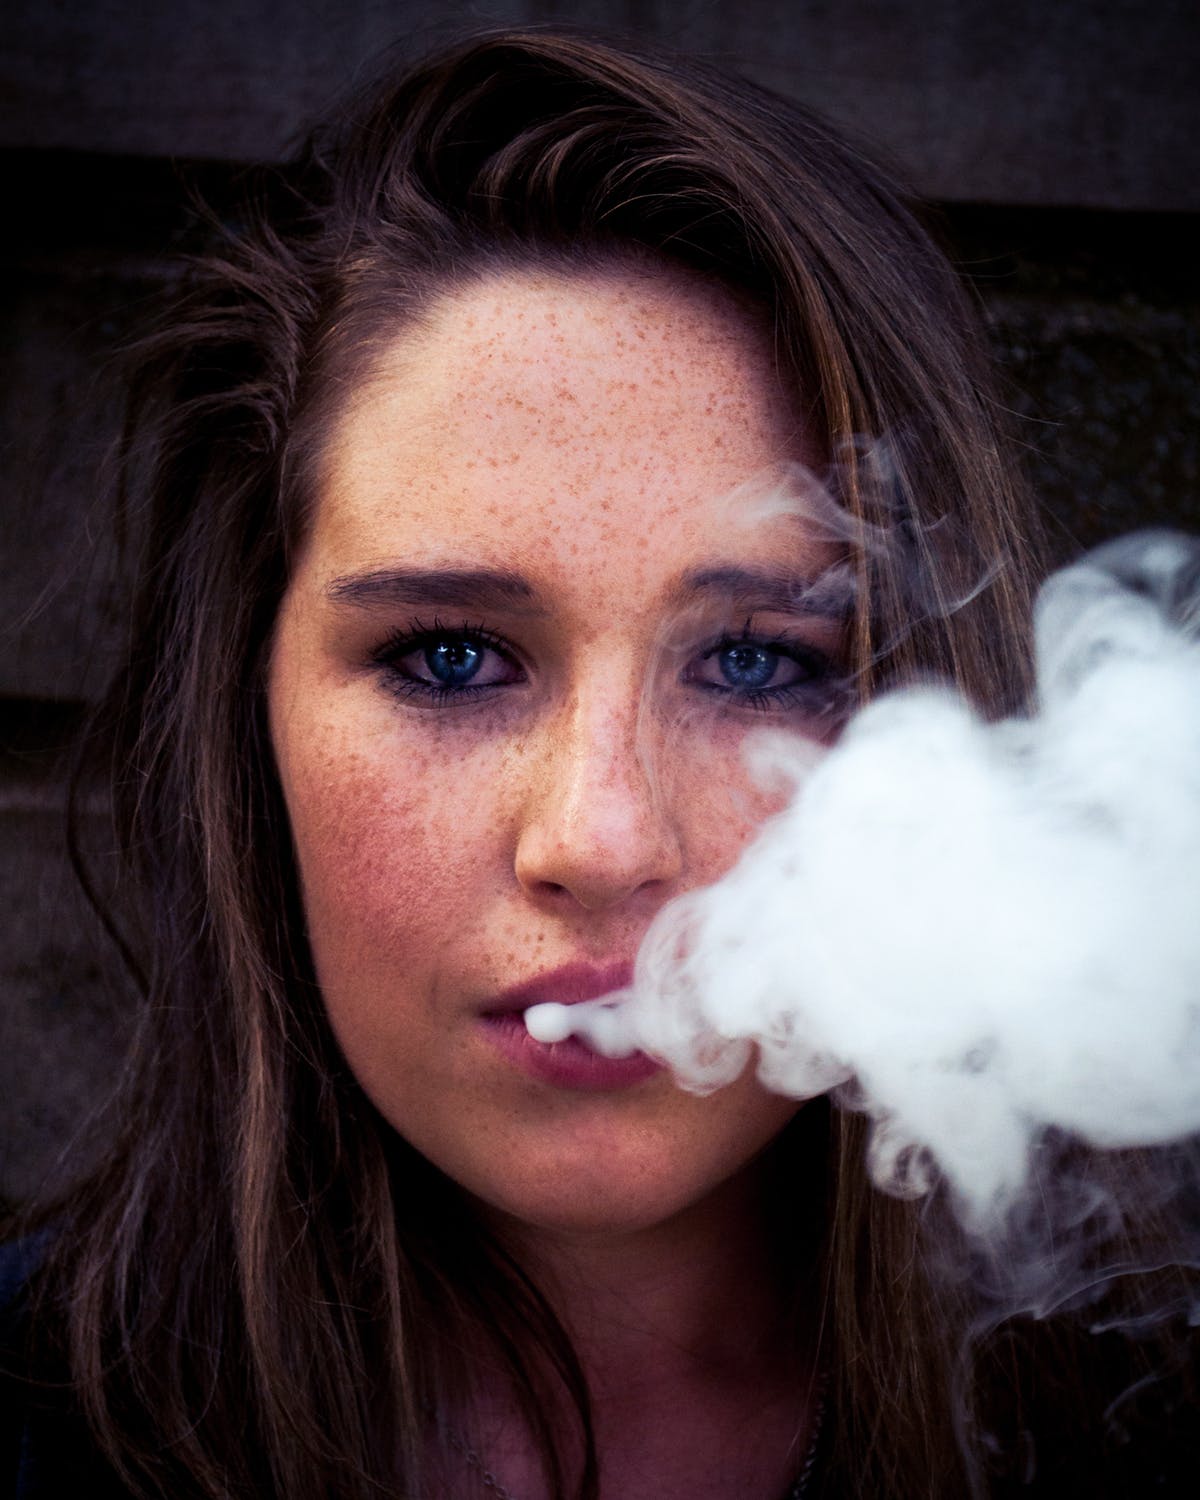 Top 6 Reasons To Consider Vaping Marijuana Instead Of Smoking